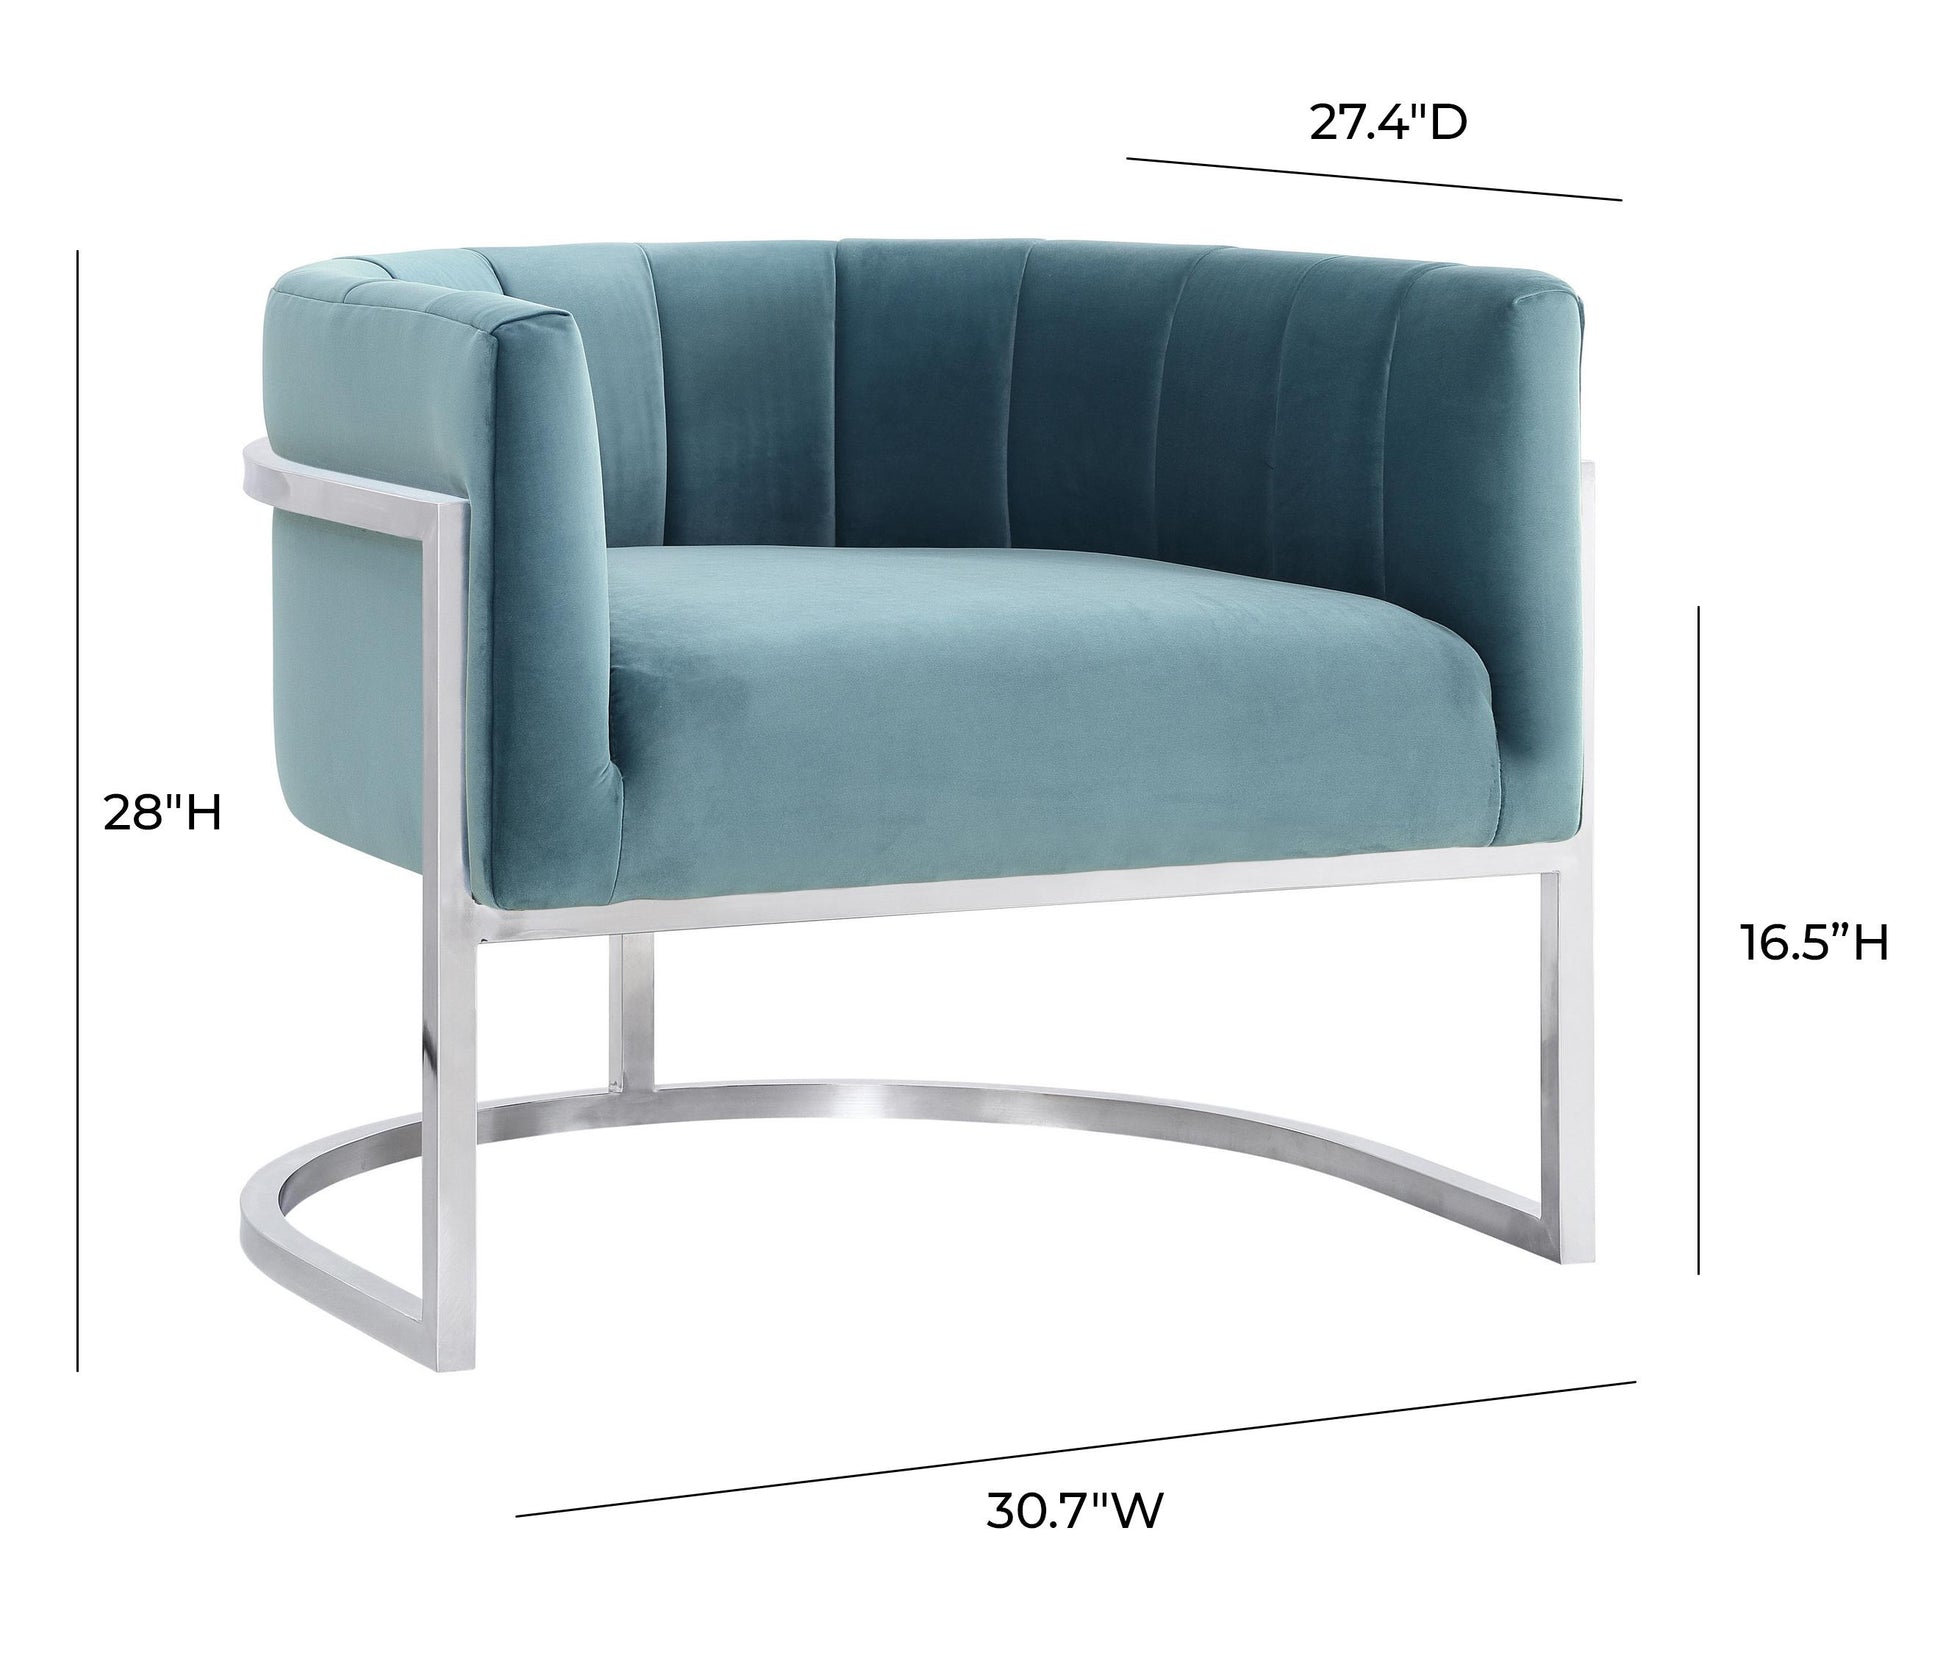 Tov Furniture Magnolia Sea Blue Chair with Silver Base